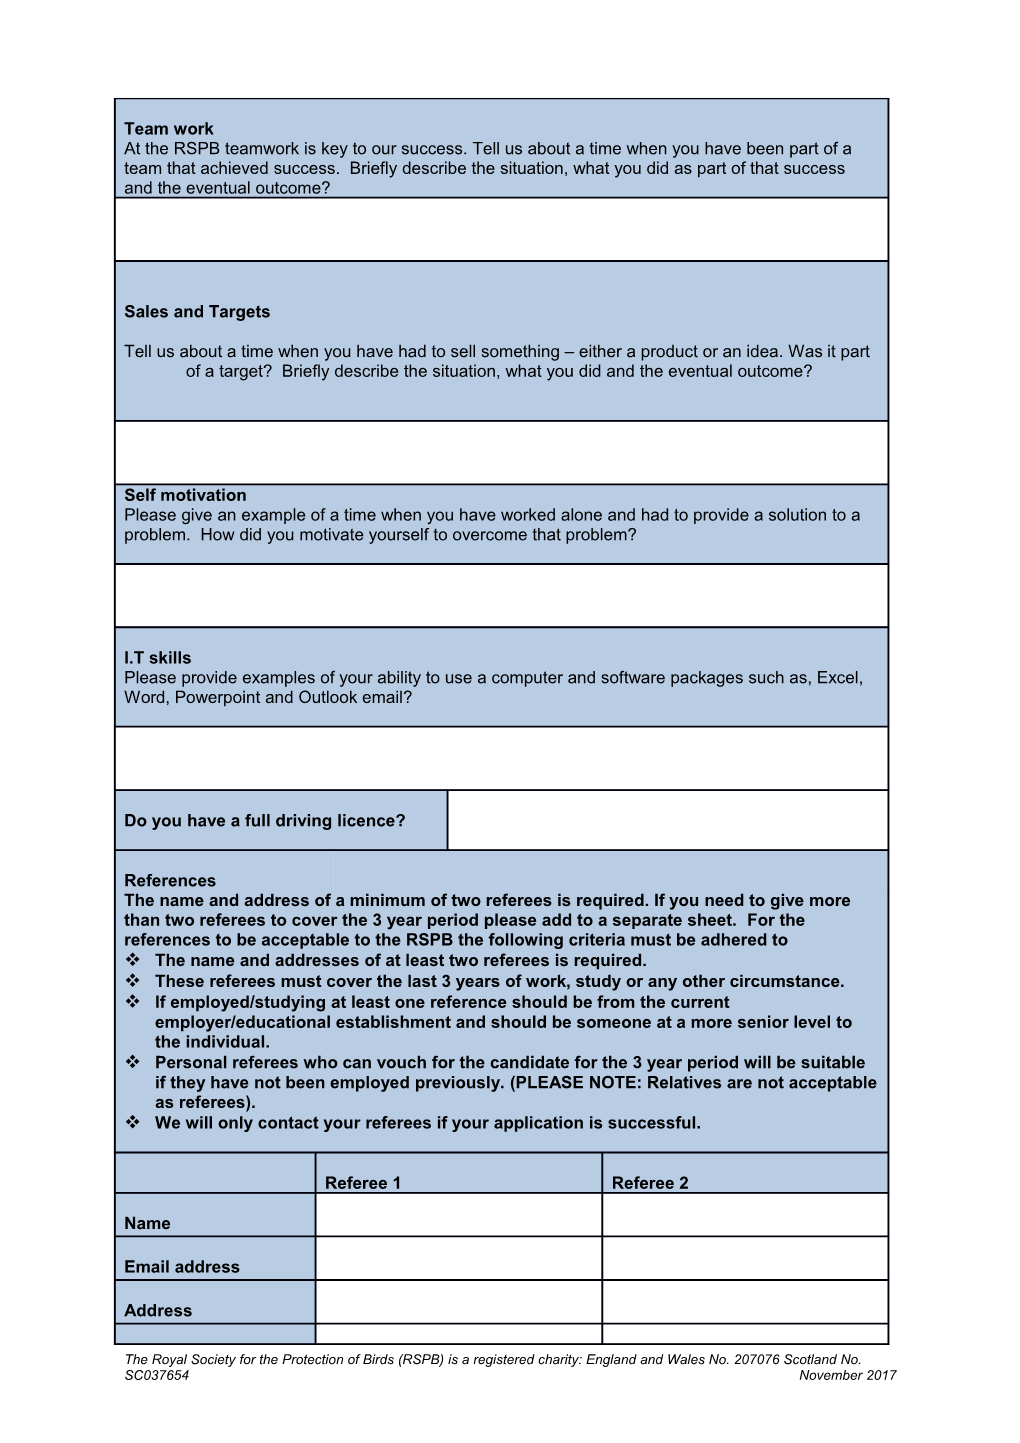 Membership Development Officer Application for Employment